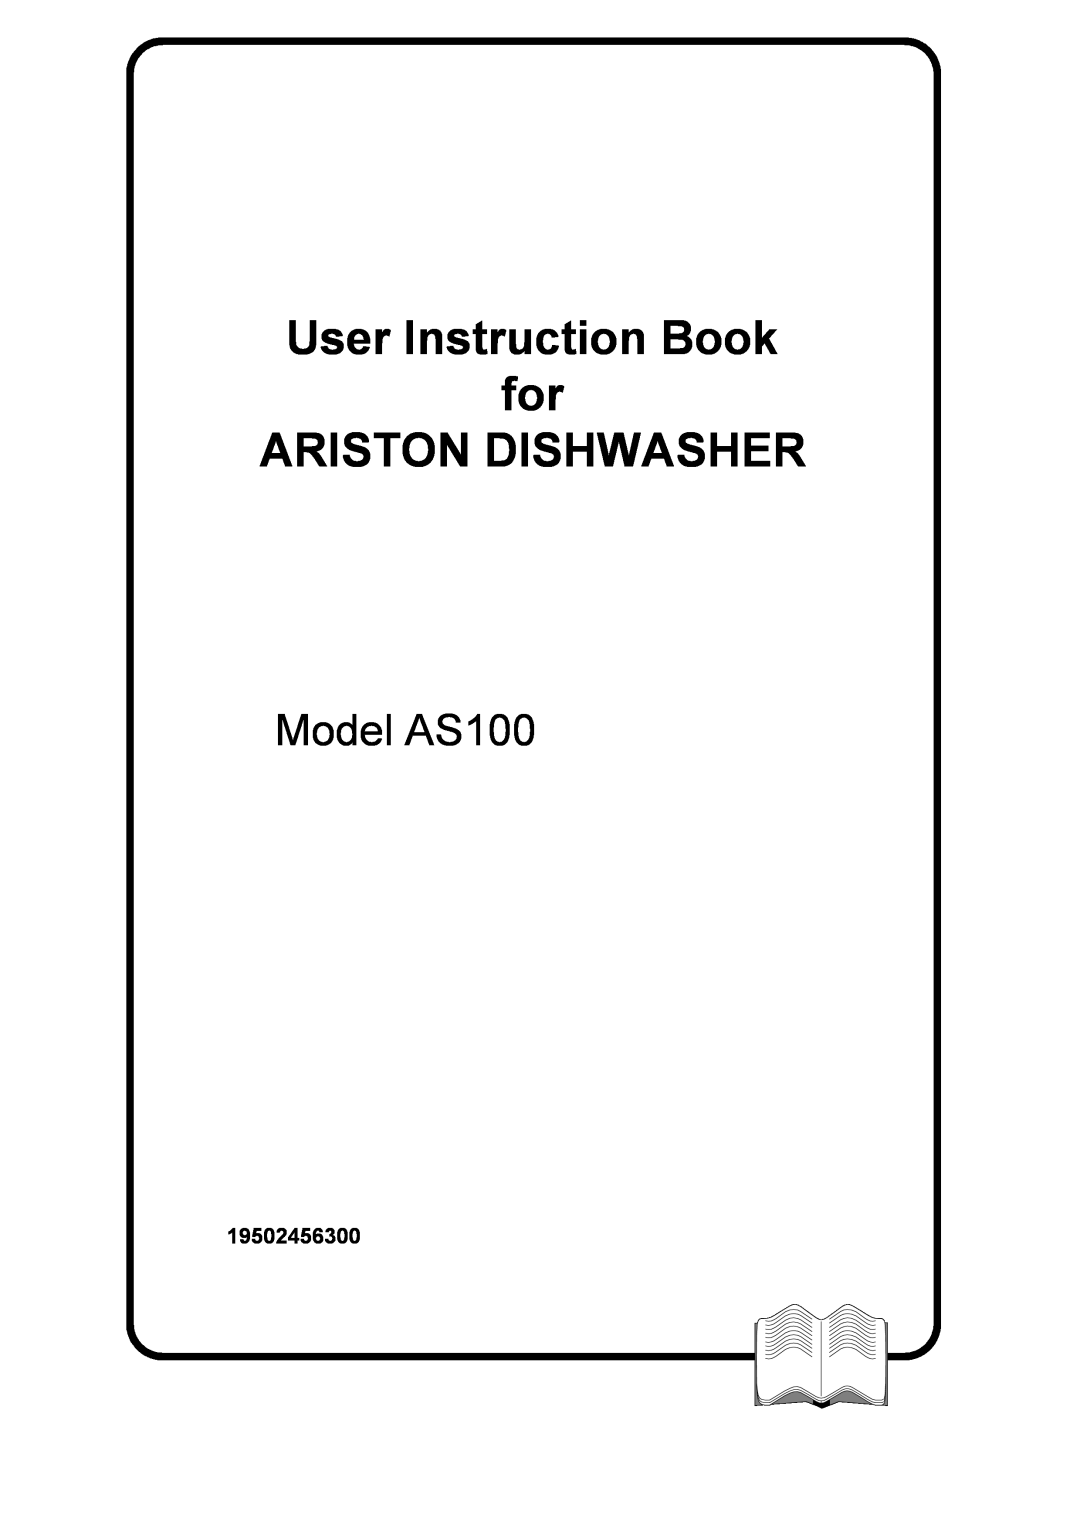 Ariston manual 19502456300, User Instruction Book for ARISTON DISHWASHER, Model AS100 